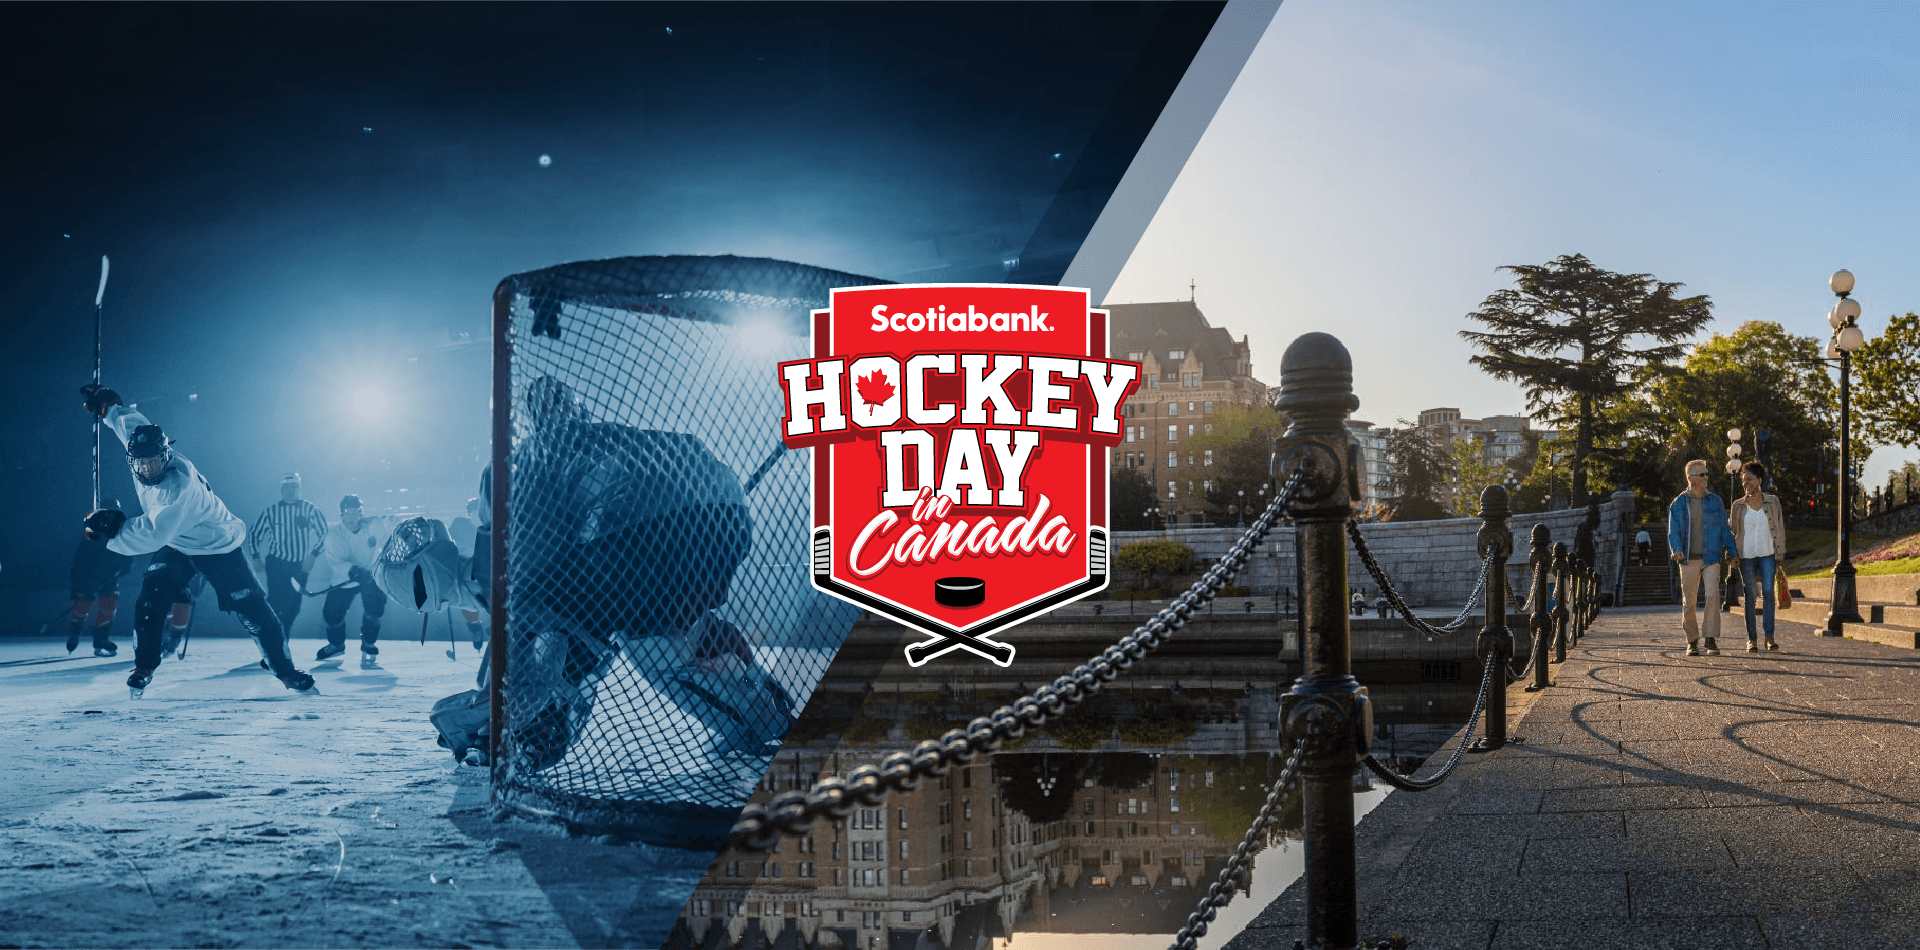 Hockey Day in Canada